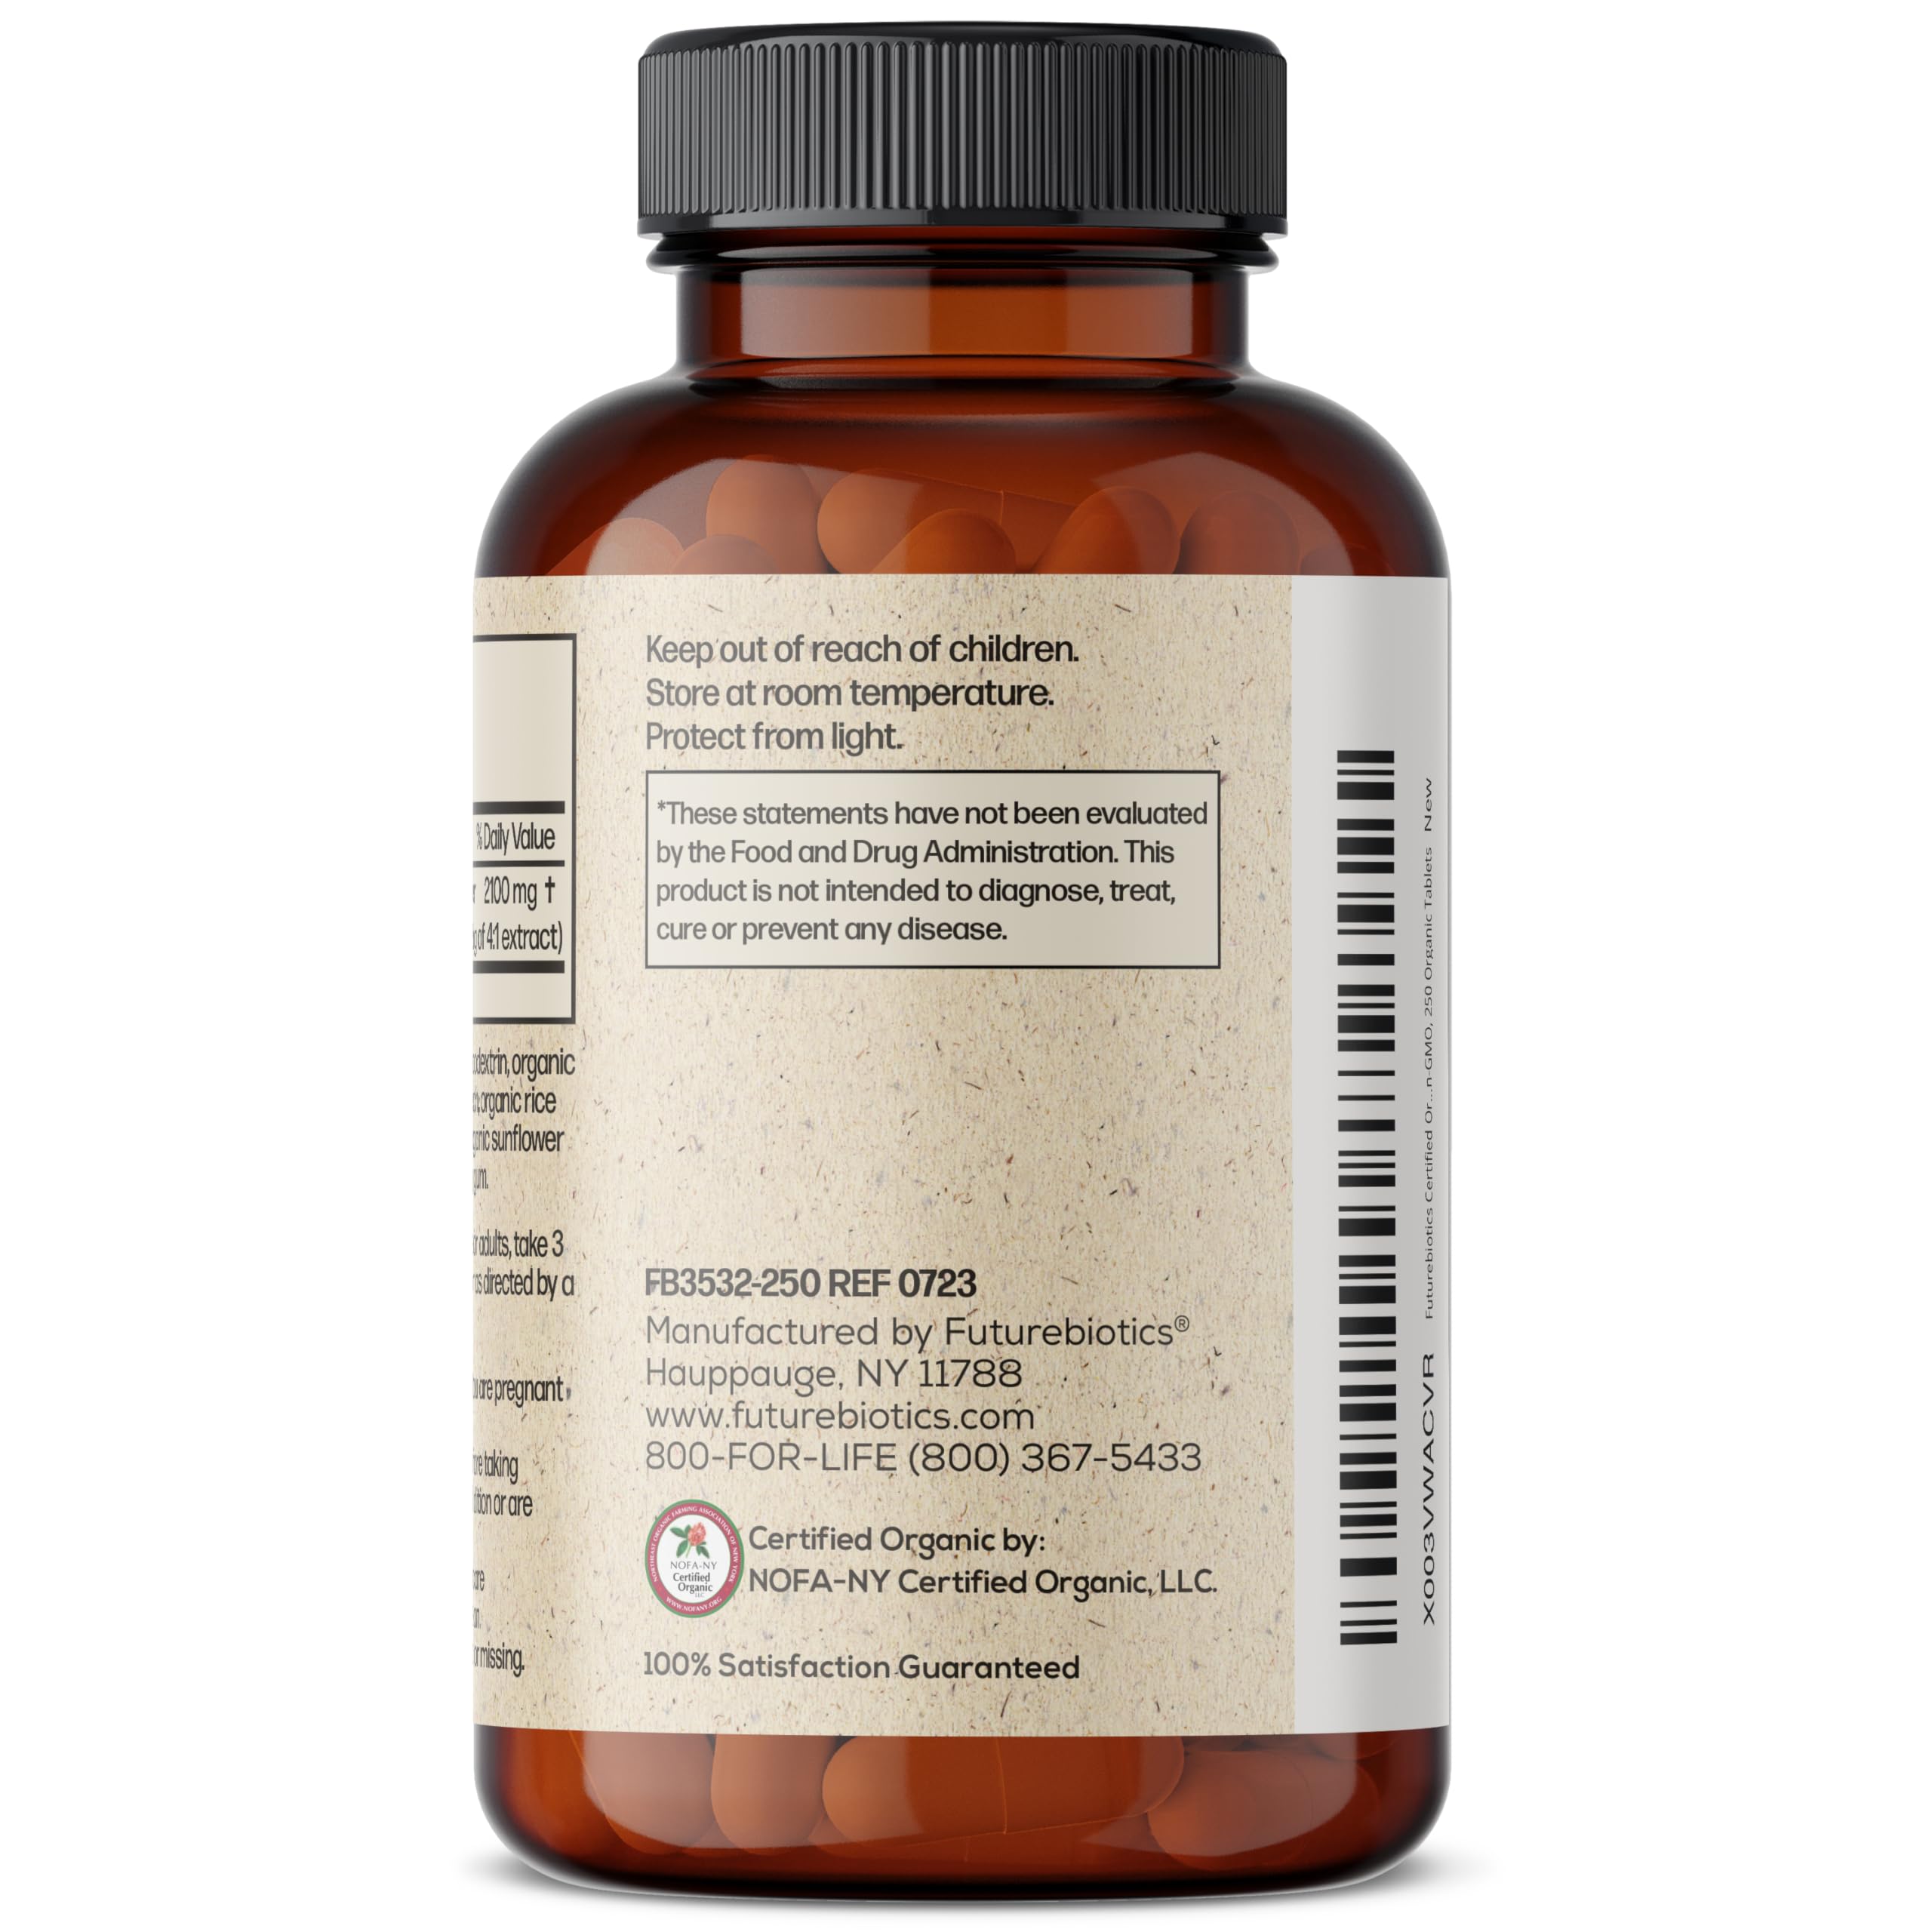 Futurebiotics Certified Organic Ashwagandha 2100 MG per Serving, Stress Mood & Energy Support Adaptogenic Herb, Non-GMO, 250 Organic Tablets